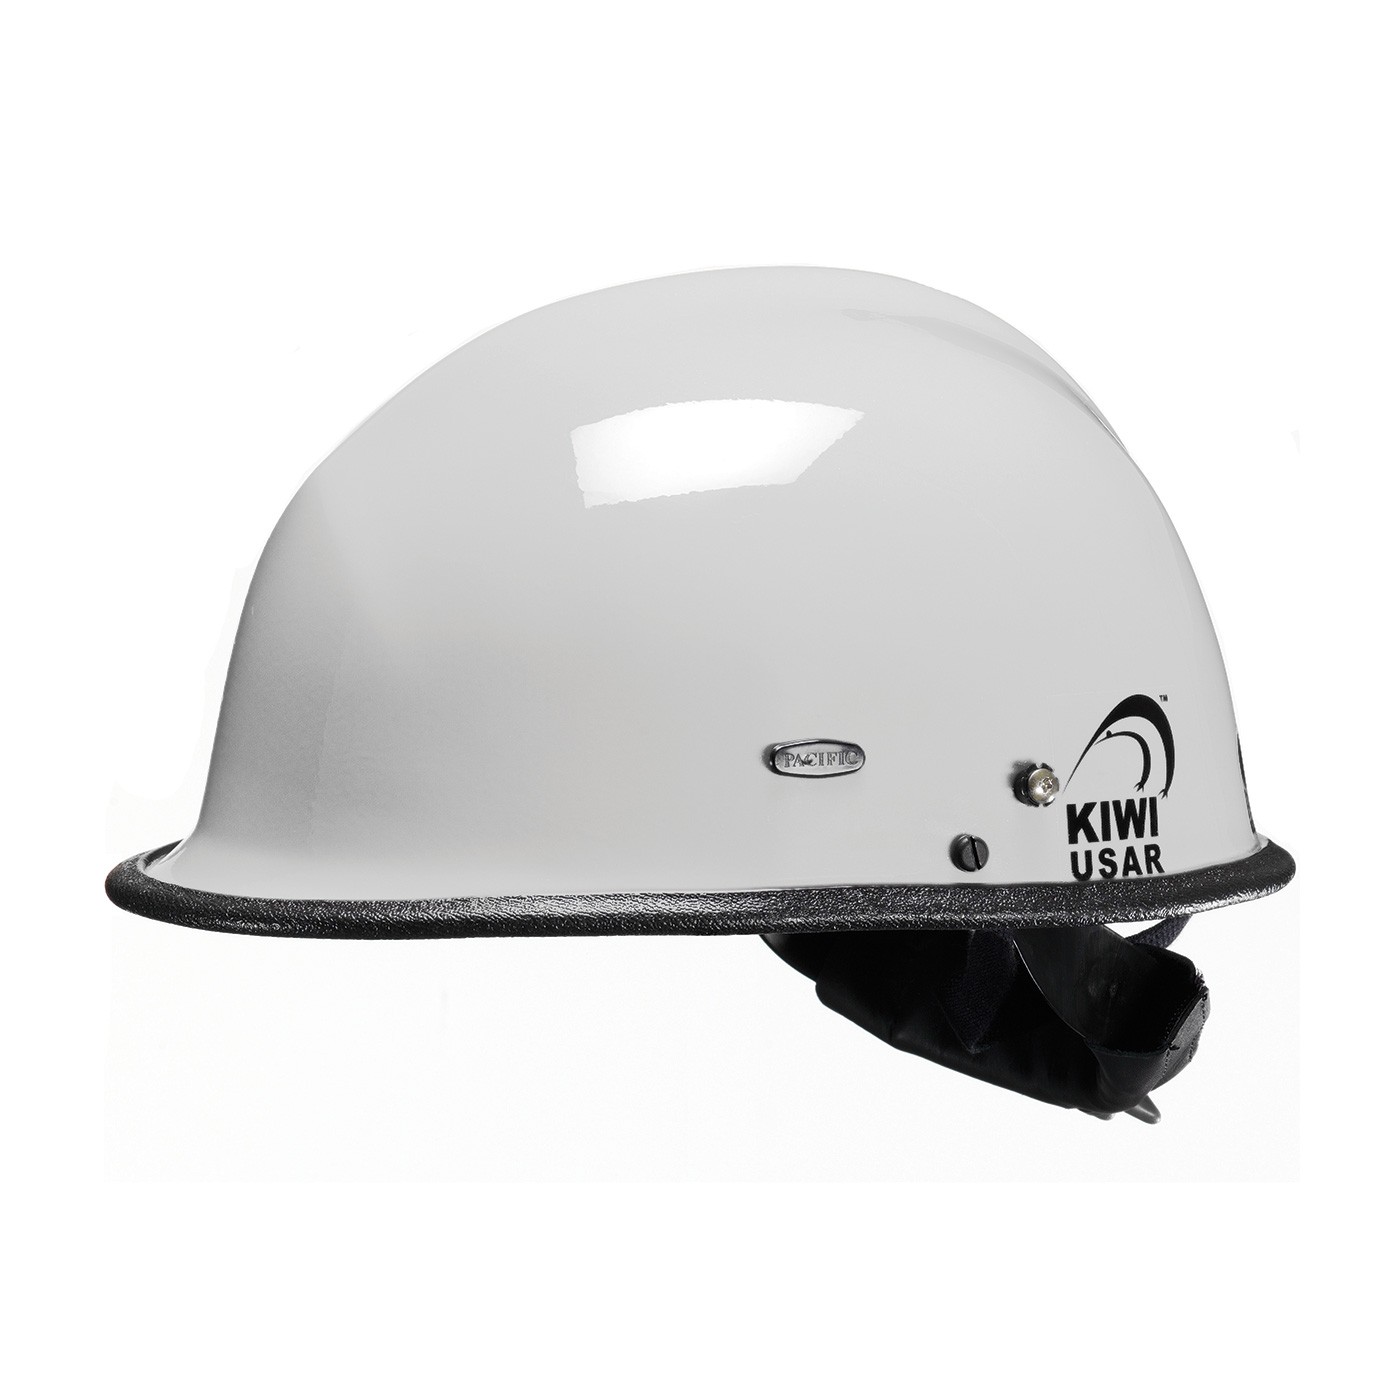 R3 KIWI USAR™ Rescue Helmet with ESS Goggle Mounts  (#804-341X)